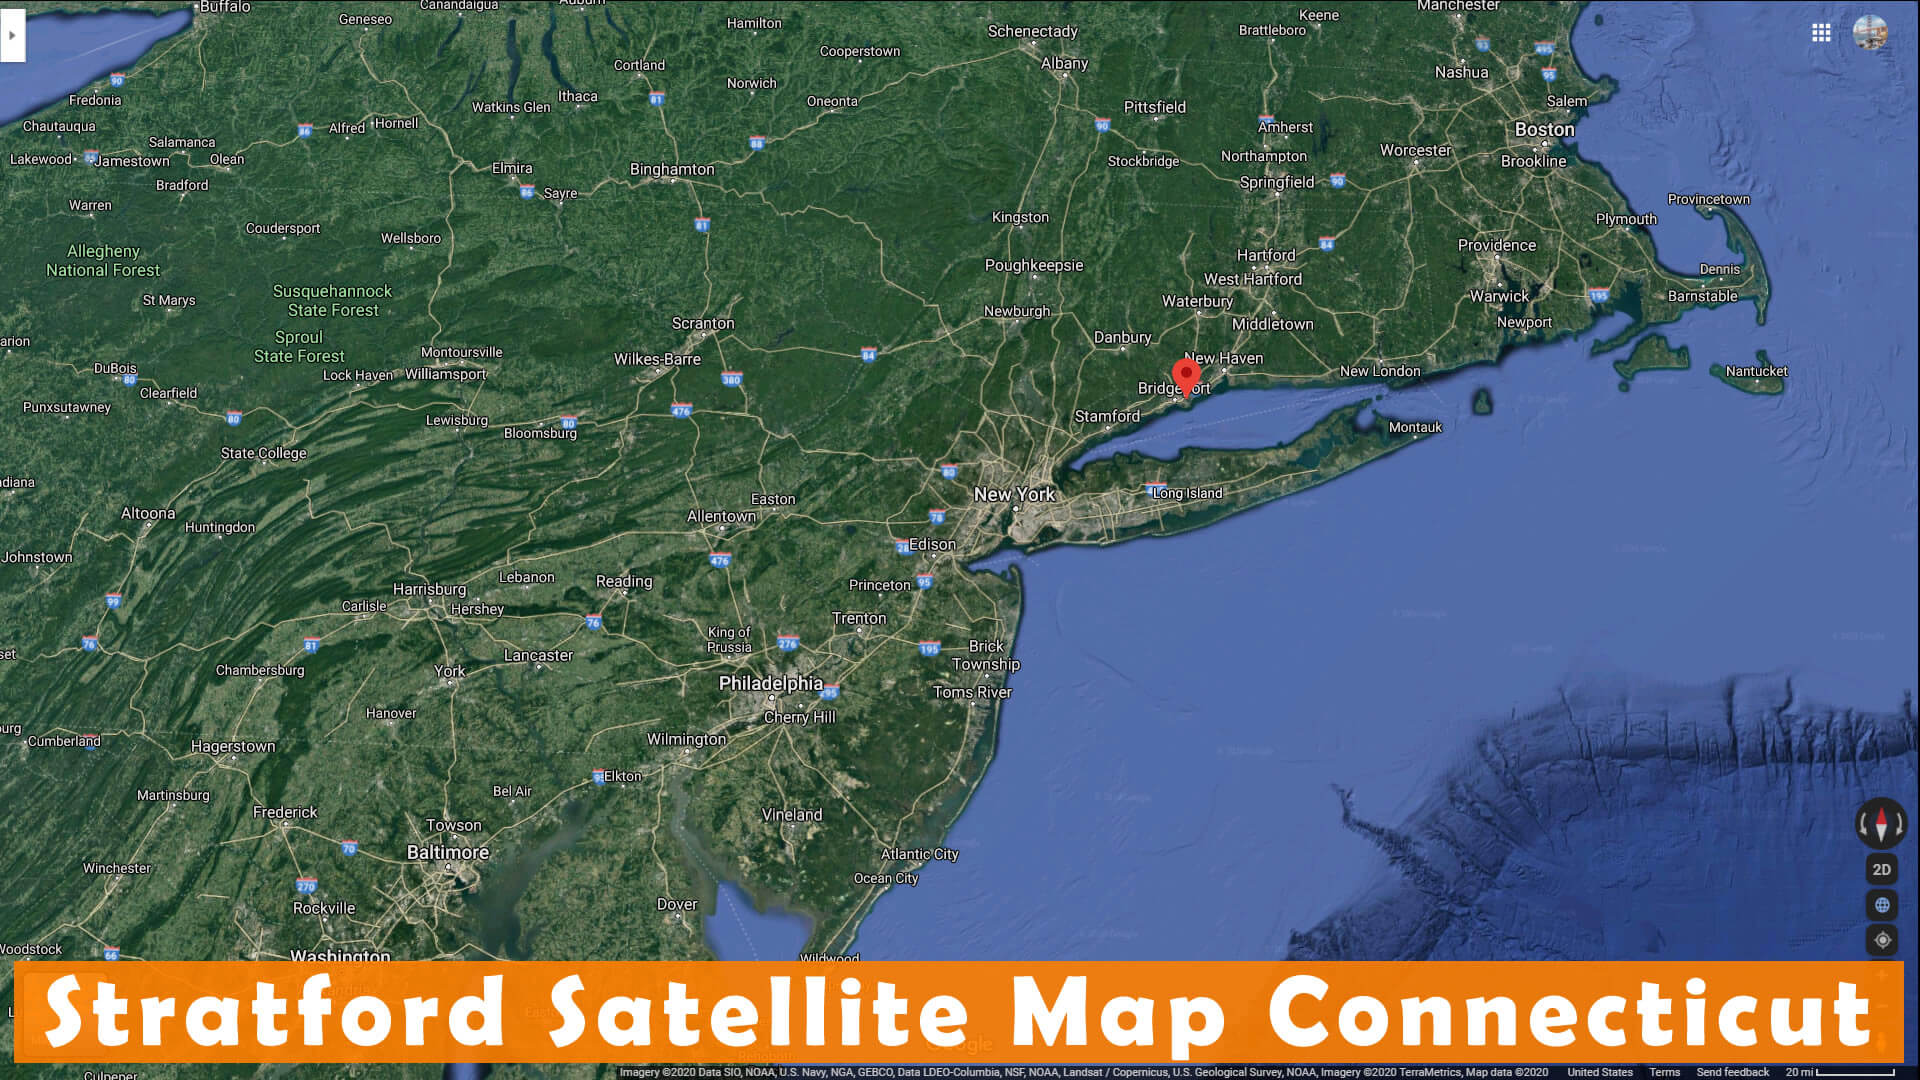 Stratford Satellite Map Connecticut